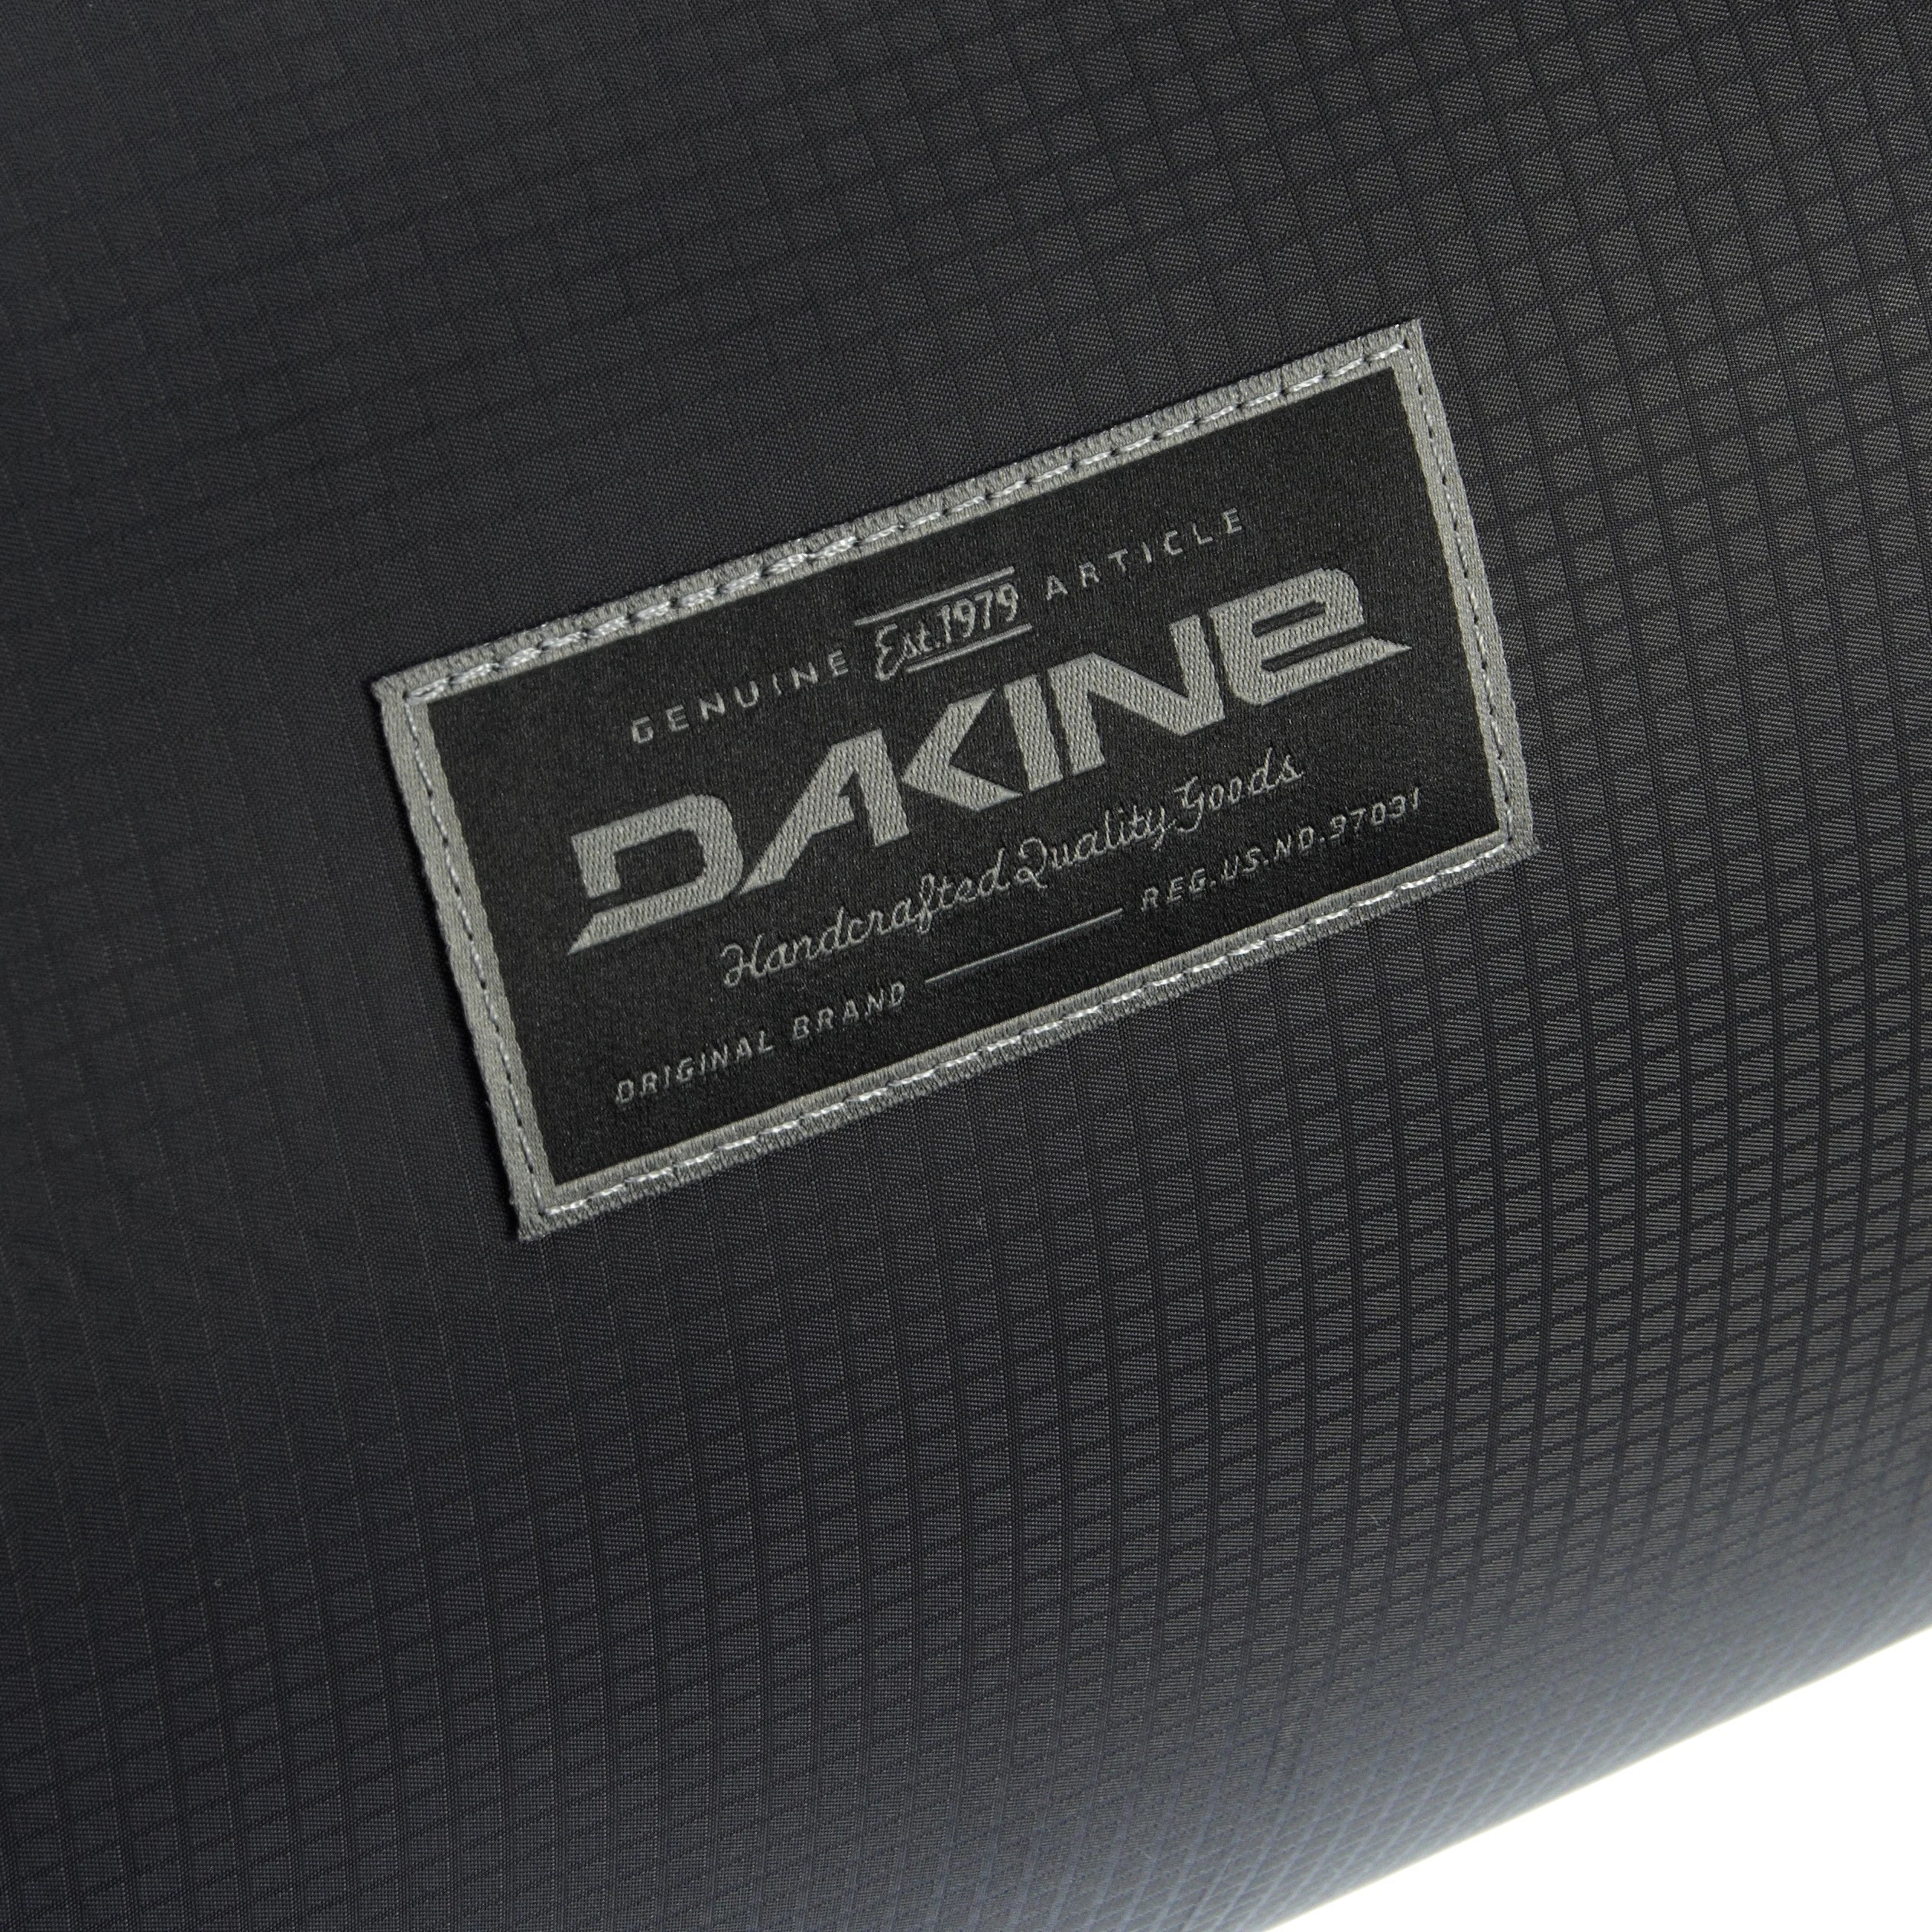 Dakine Stashable Collection Stashable Travel Bag 51 cm - inkwell